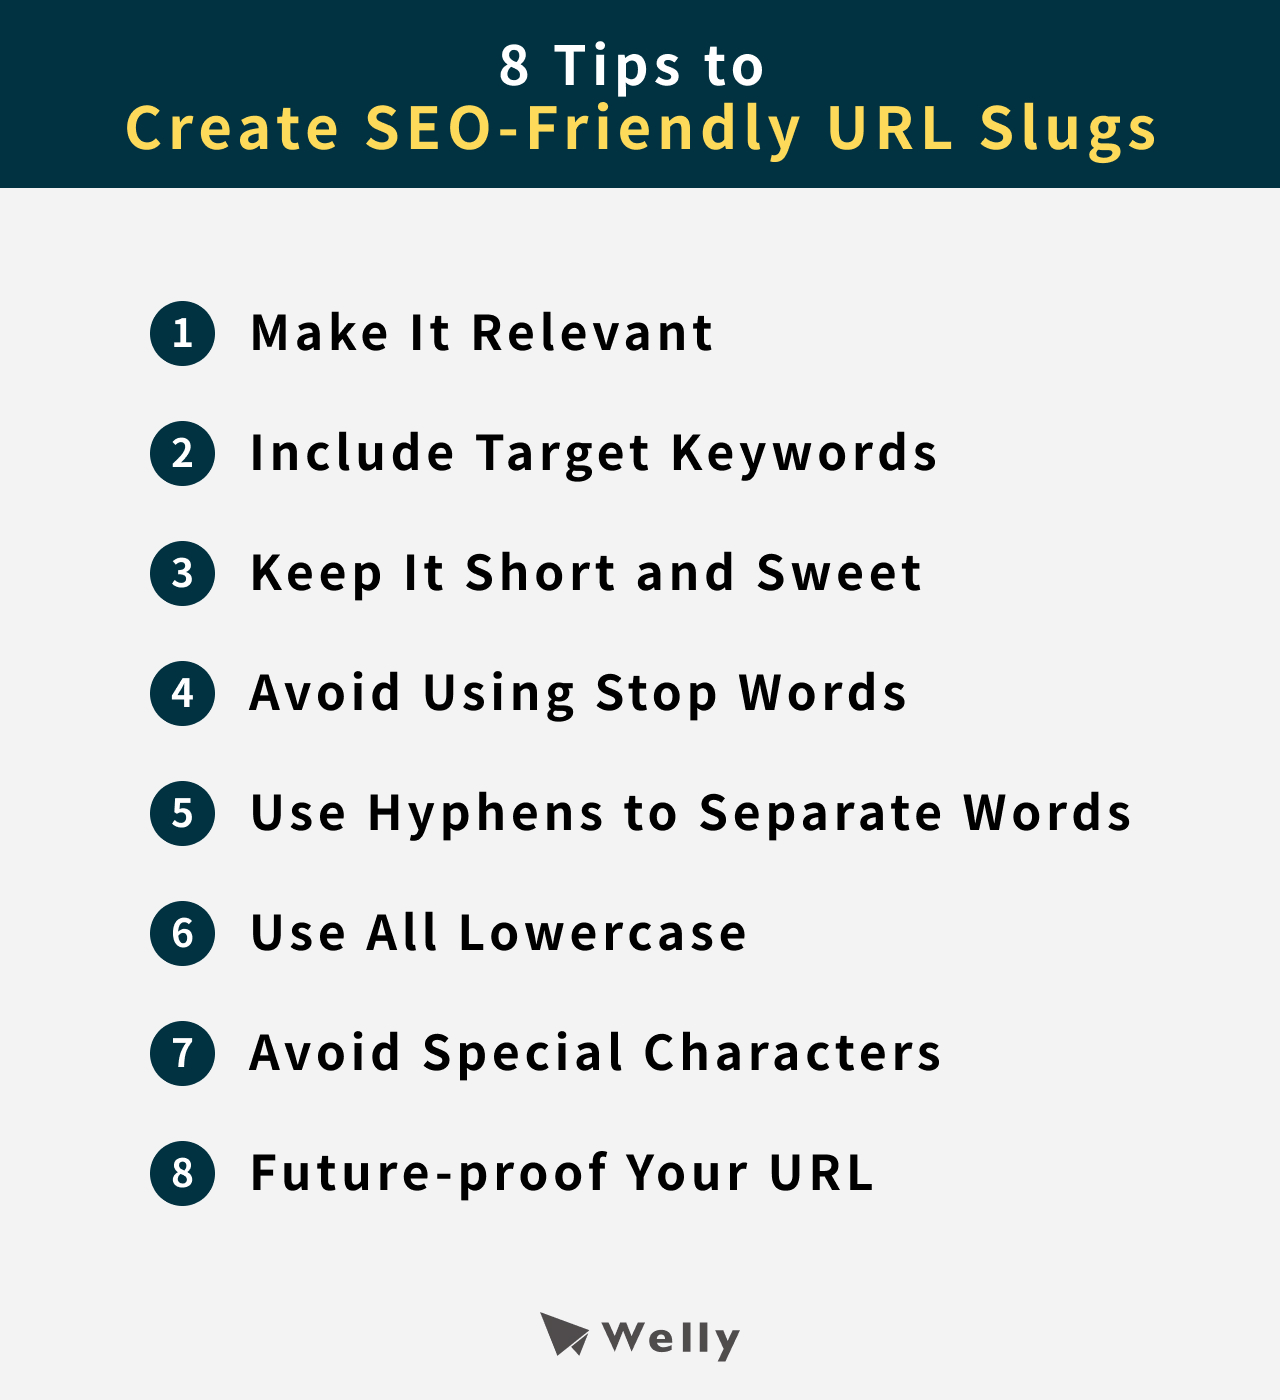 Tips to Create SEO-Friendly URL Slugs